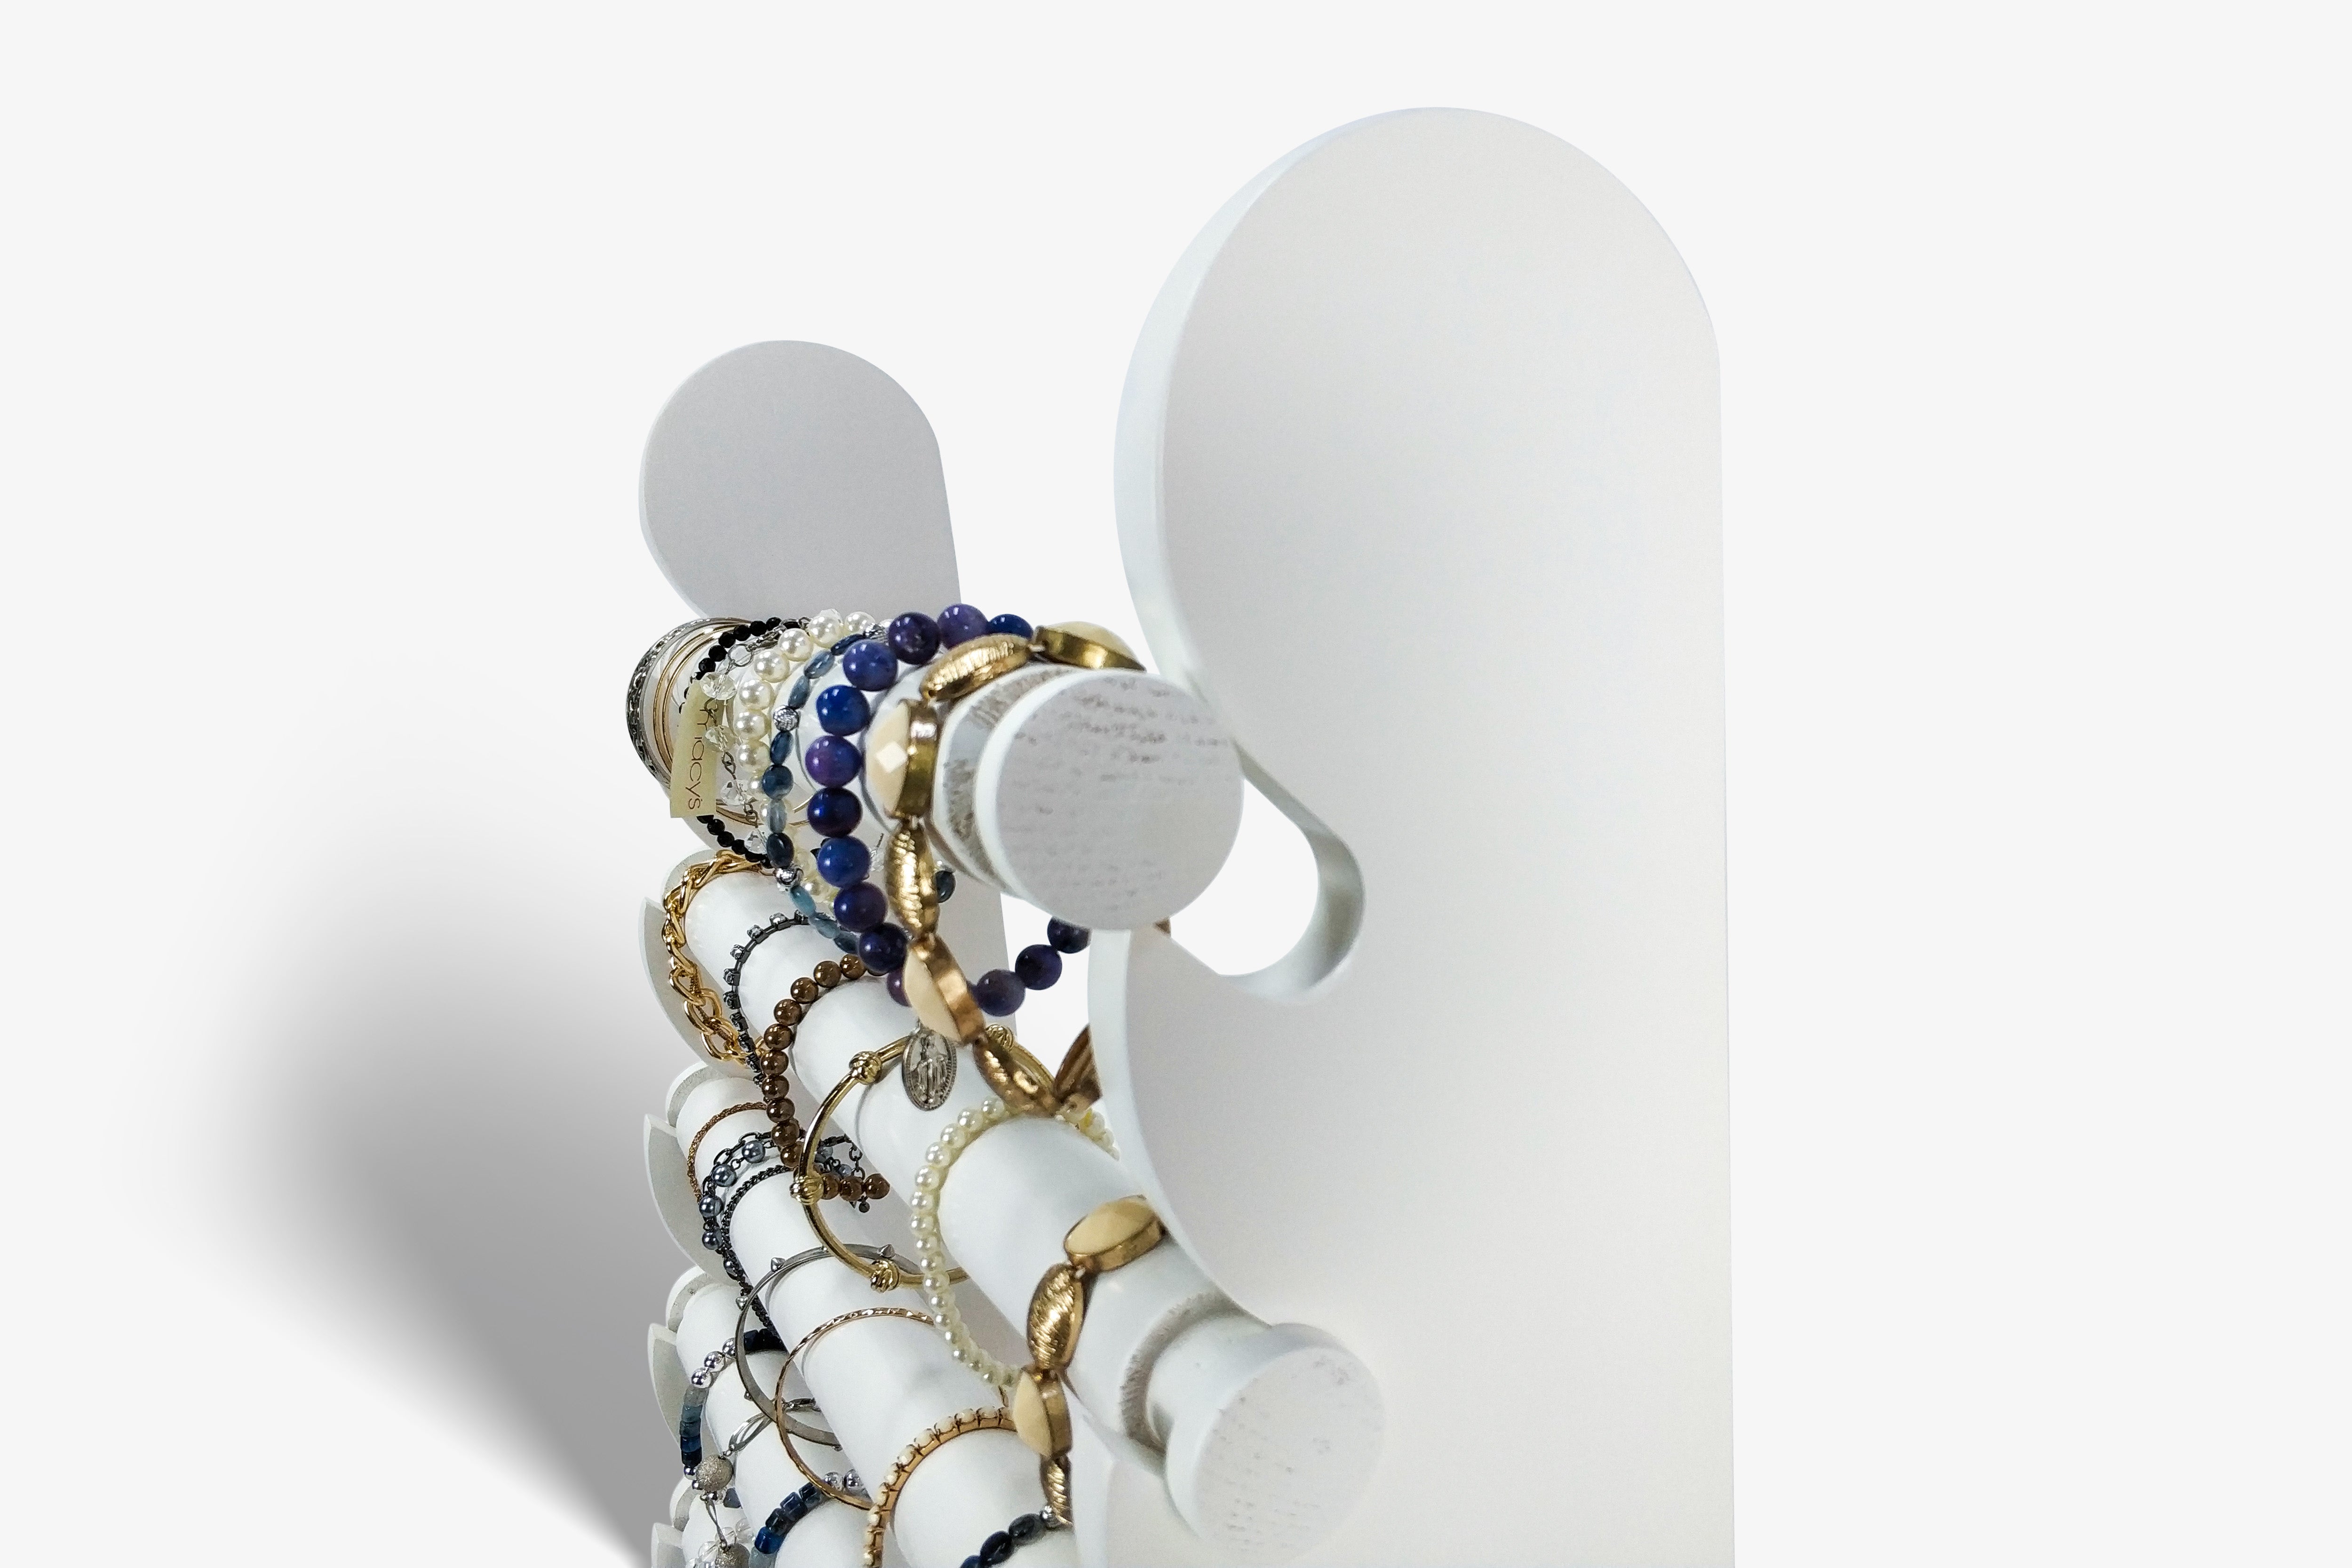 Giant 10 Level White Bracelet Display - Bracelet & Bangle Holder Stand With Drawer